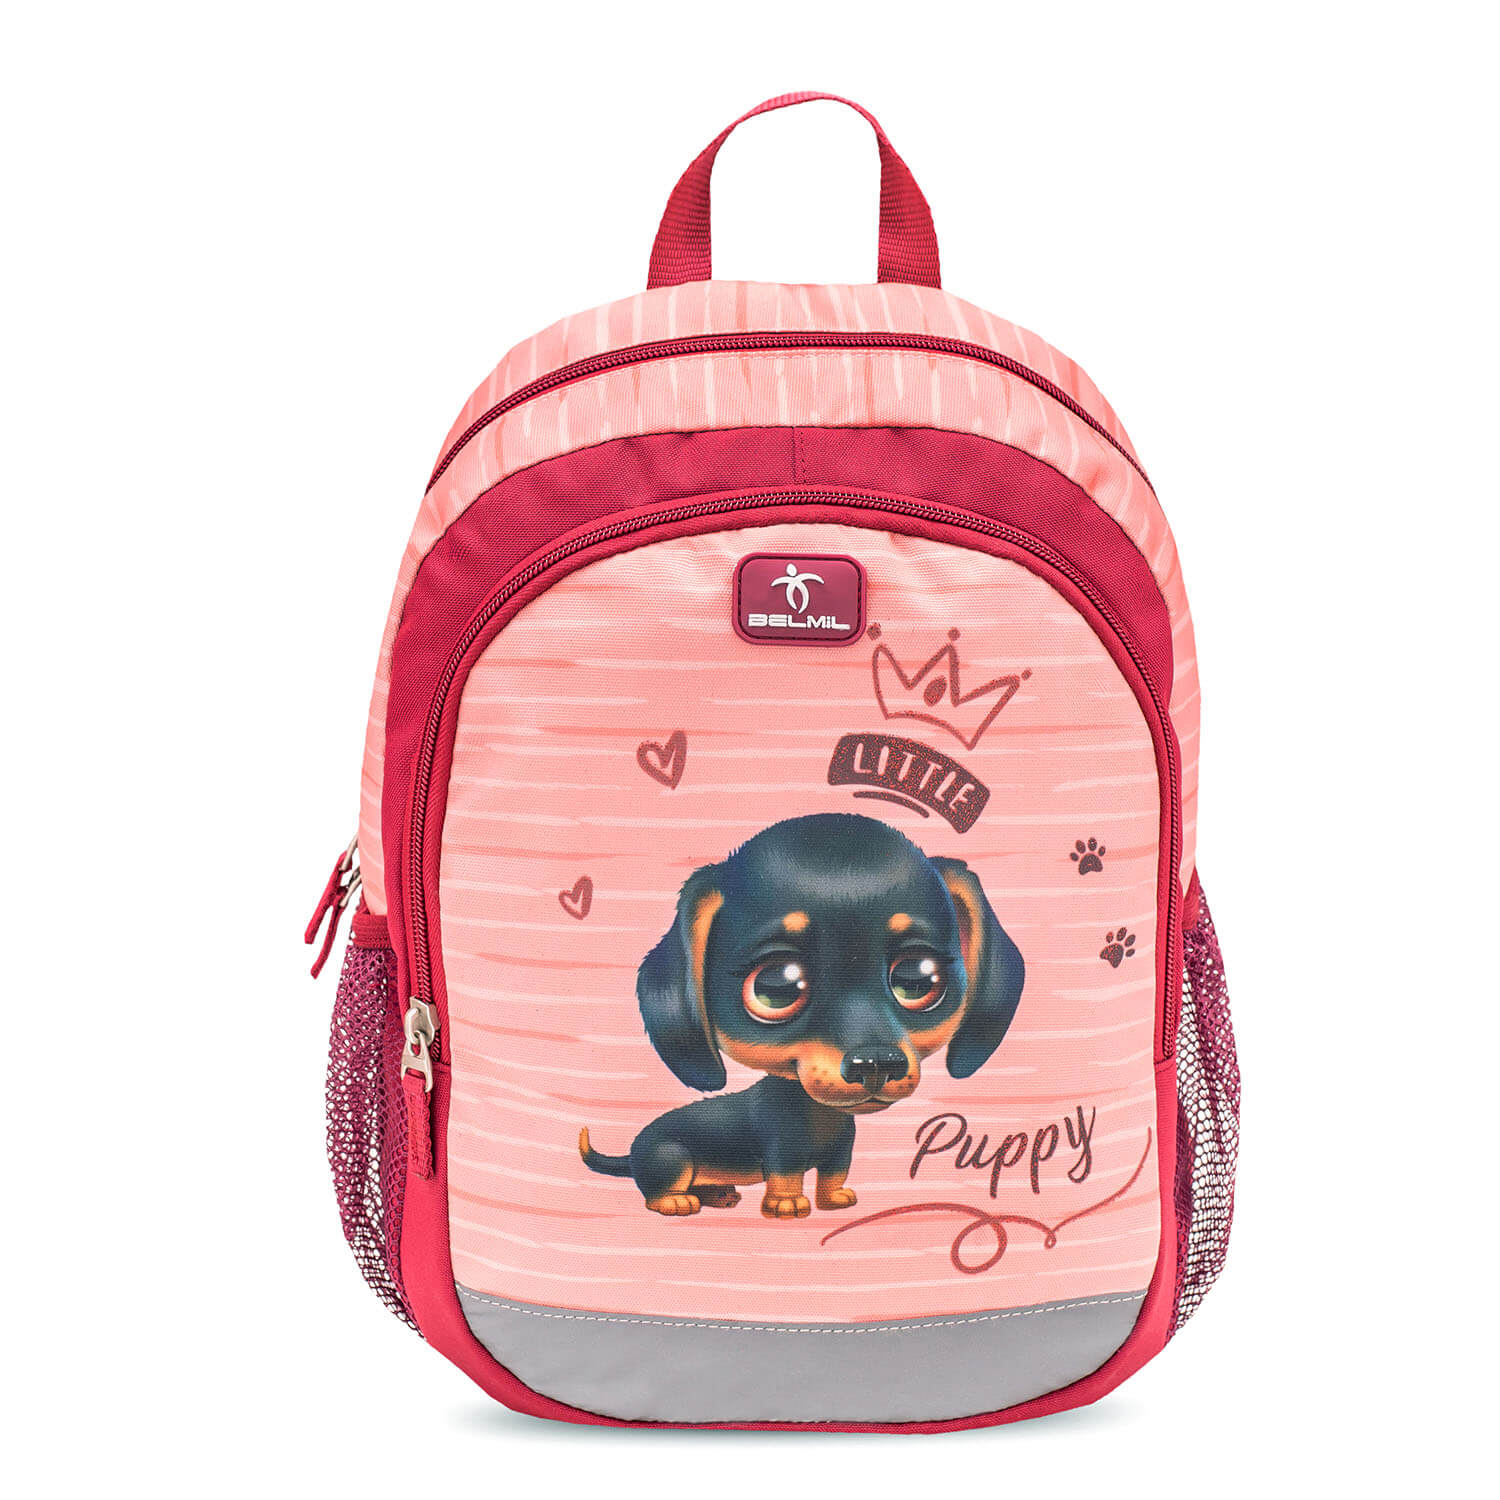 Kiddy Plus Little Puppy Kindergarten Bag